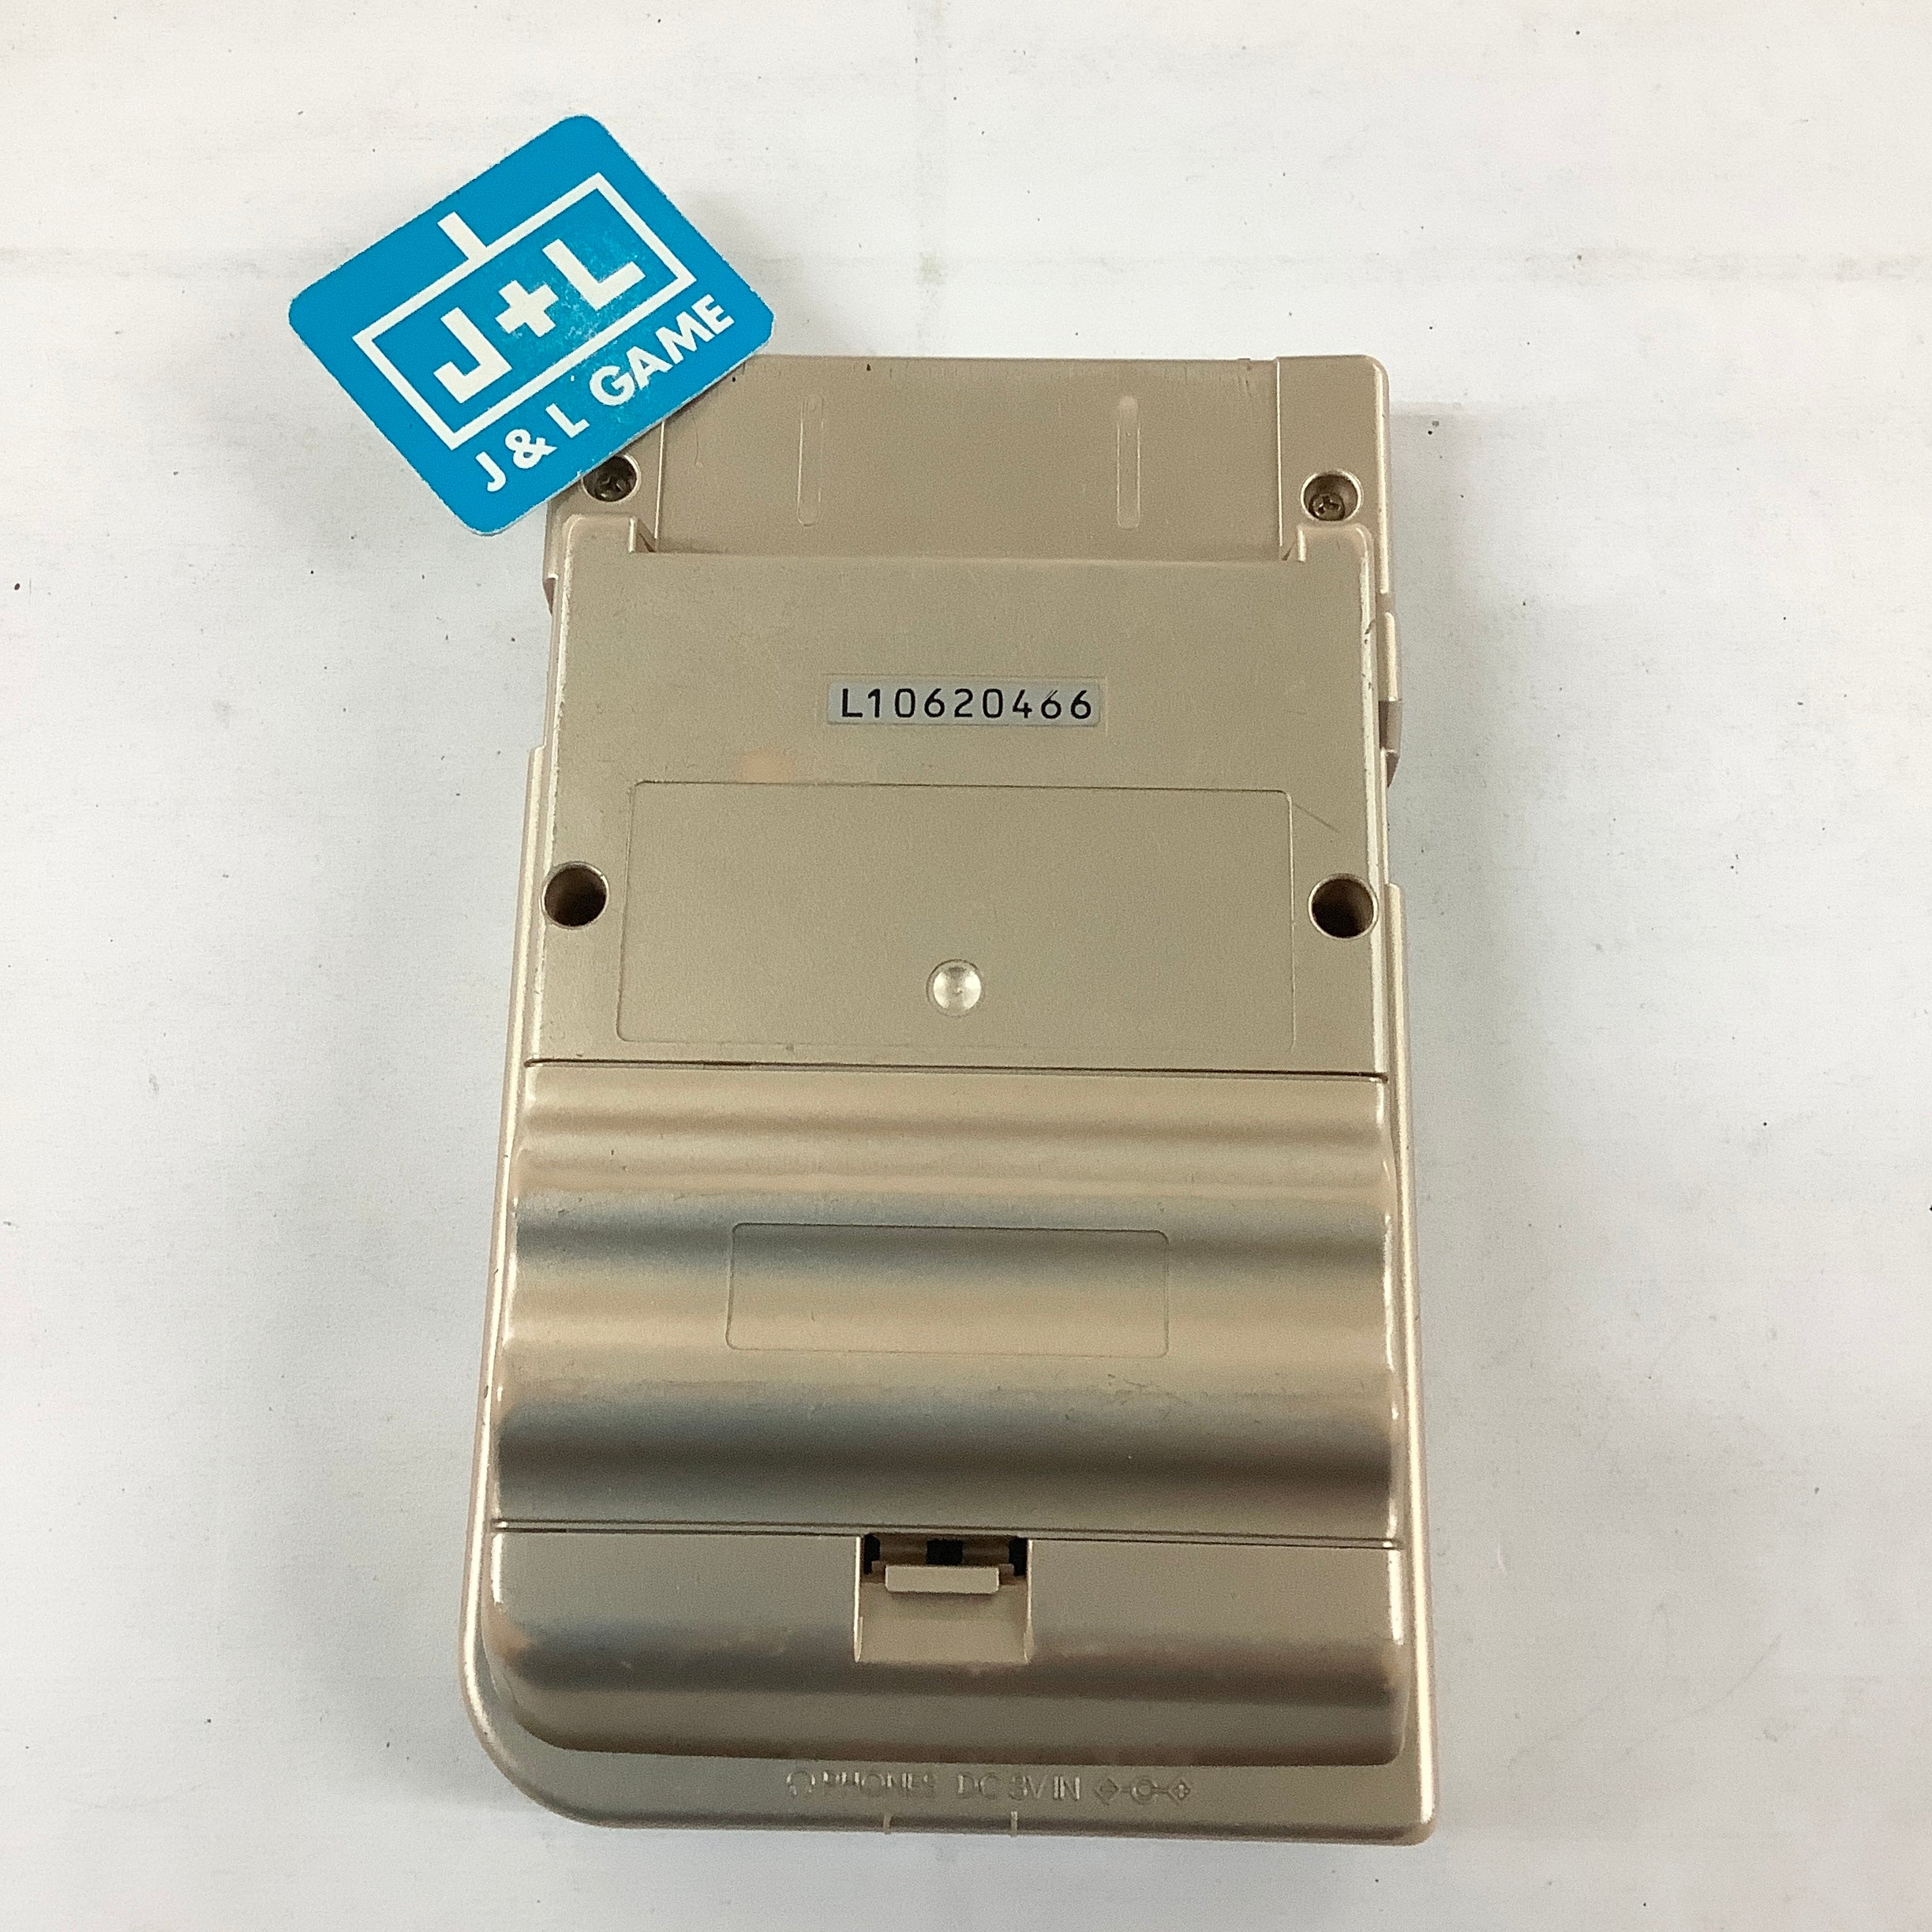 Nintendo Game Boy Light (Gold) - (GBP) Game Boy Pocket [Pre-Owned] (Japanese Import) Consoles Nintendo   